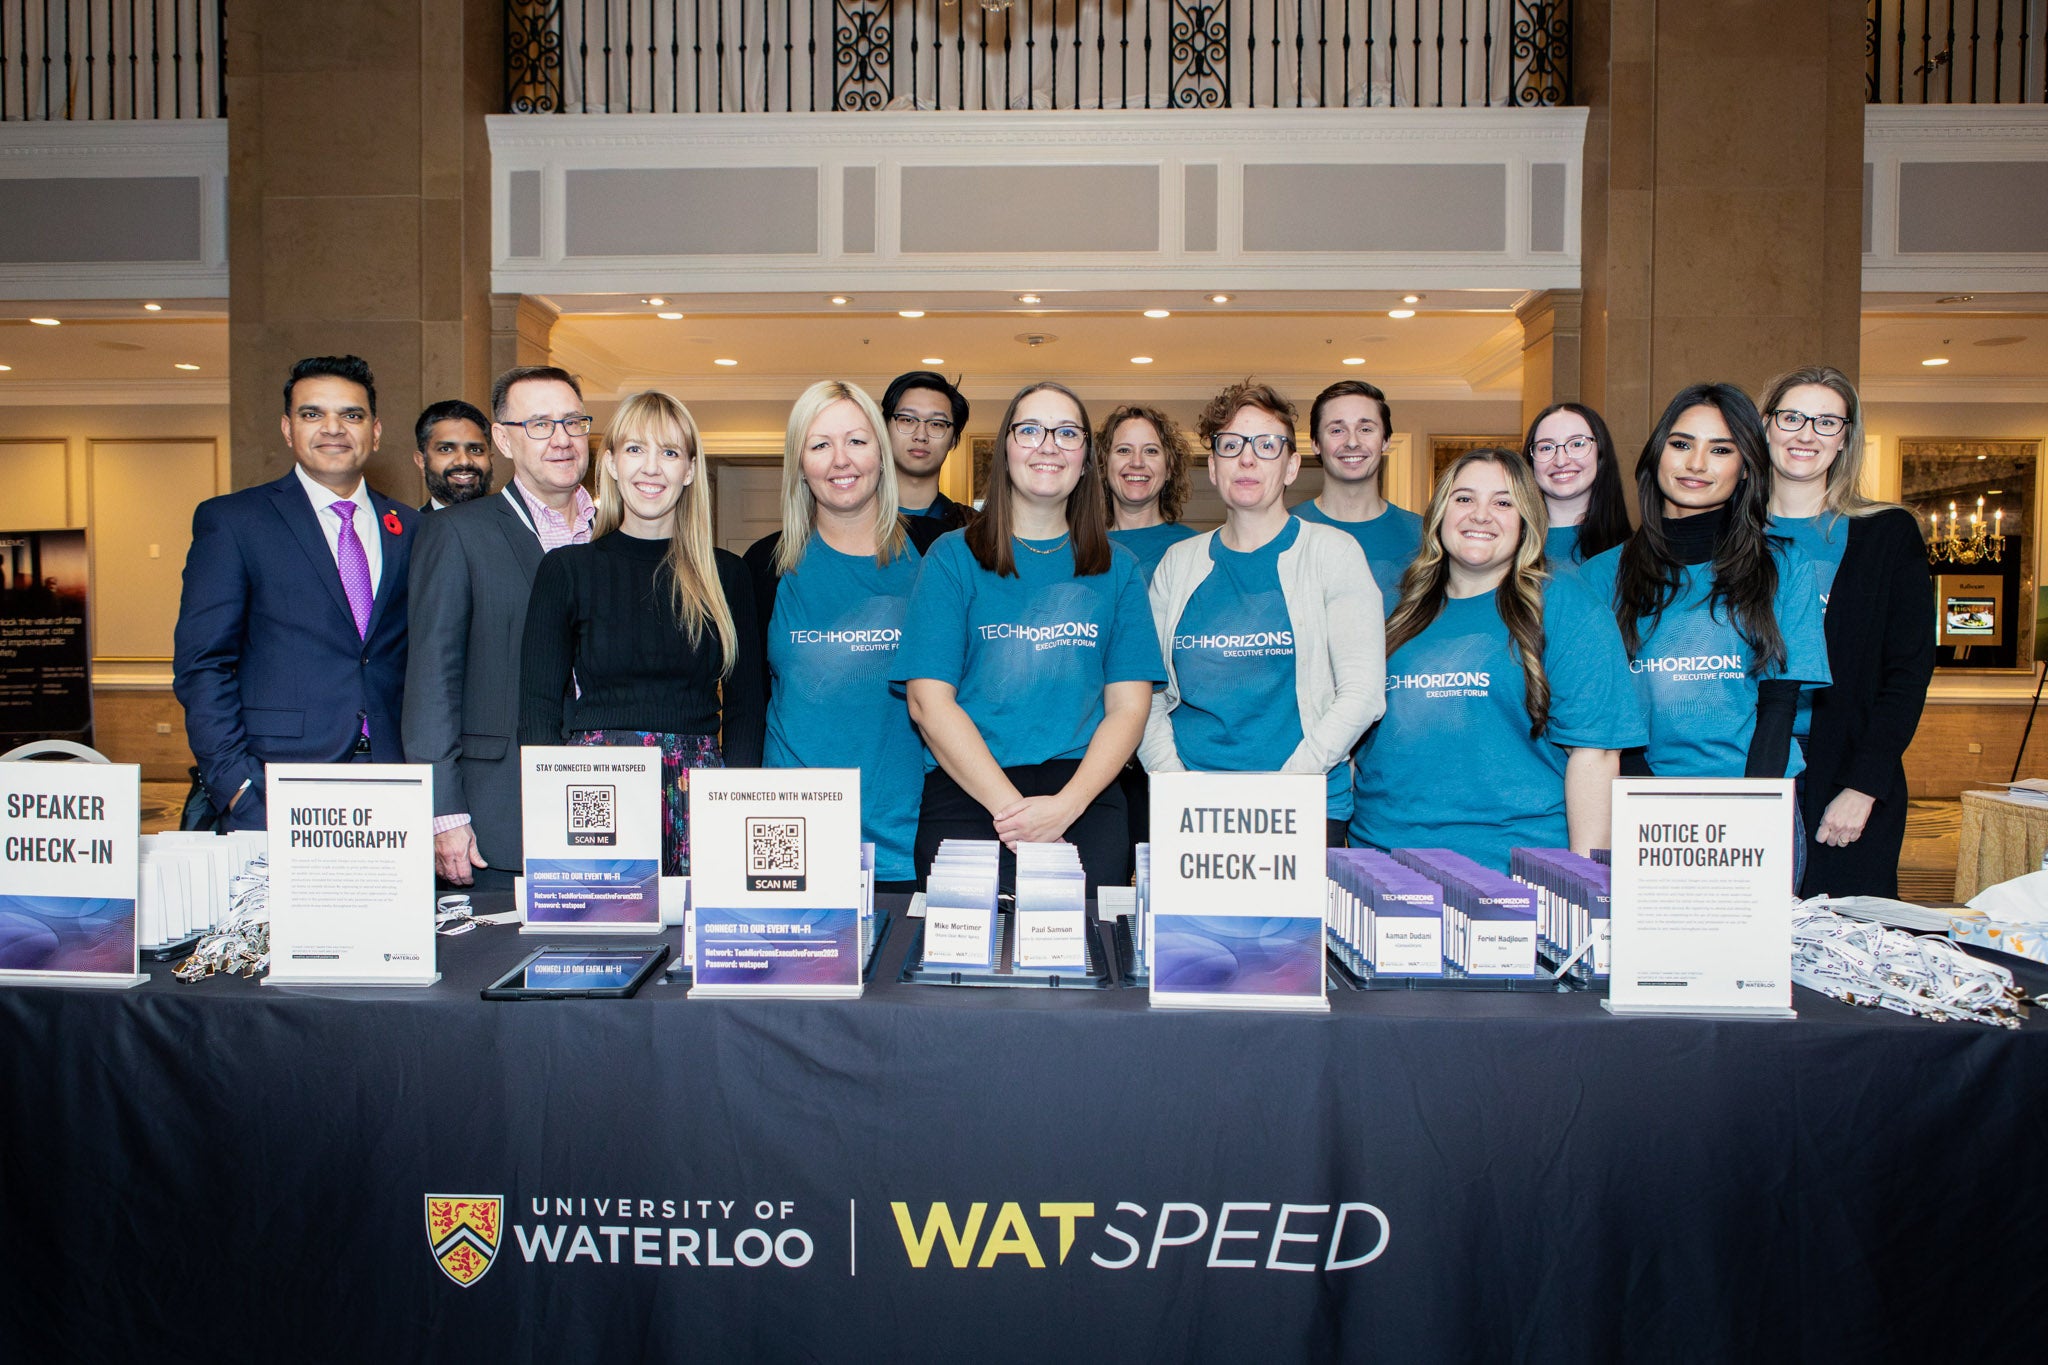 the WatSPEED team posing together